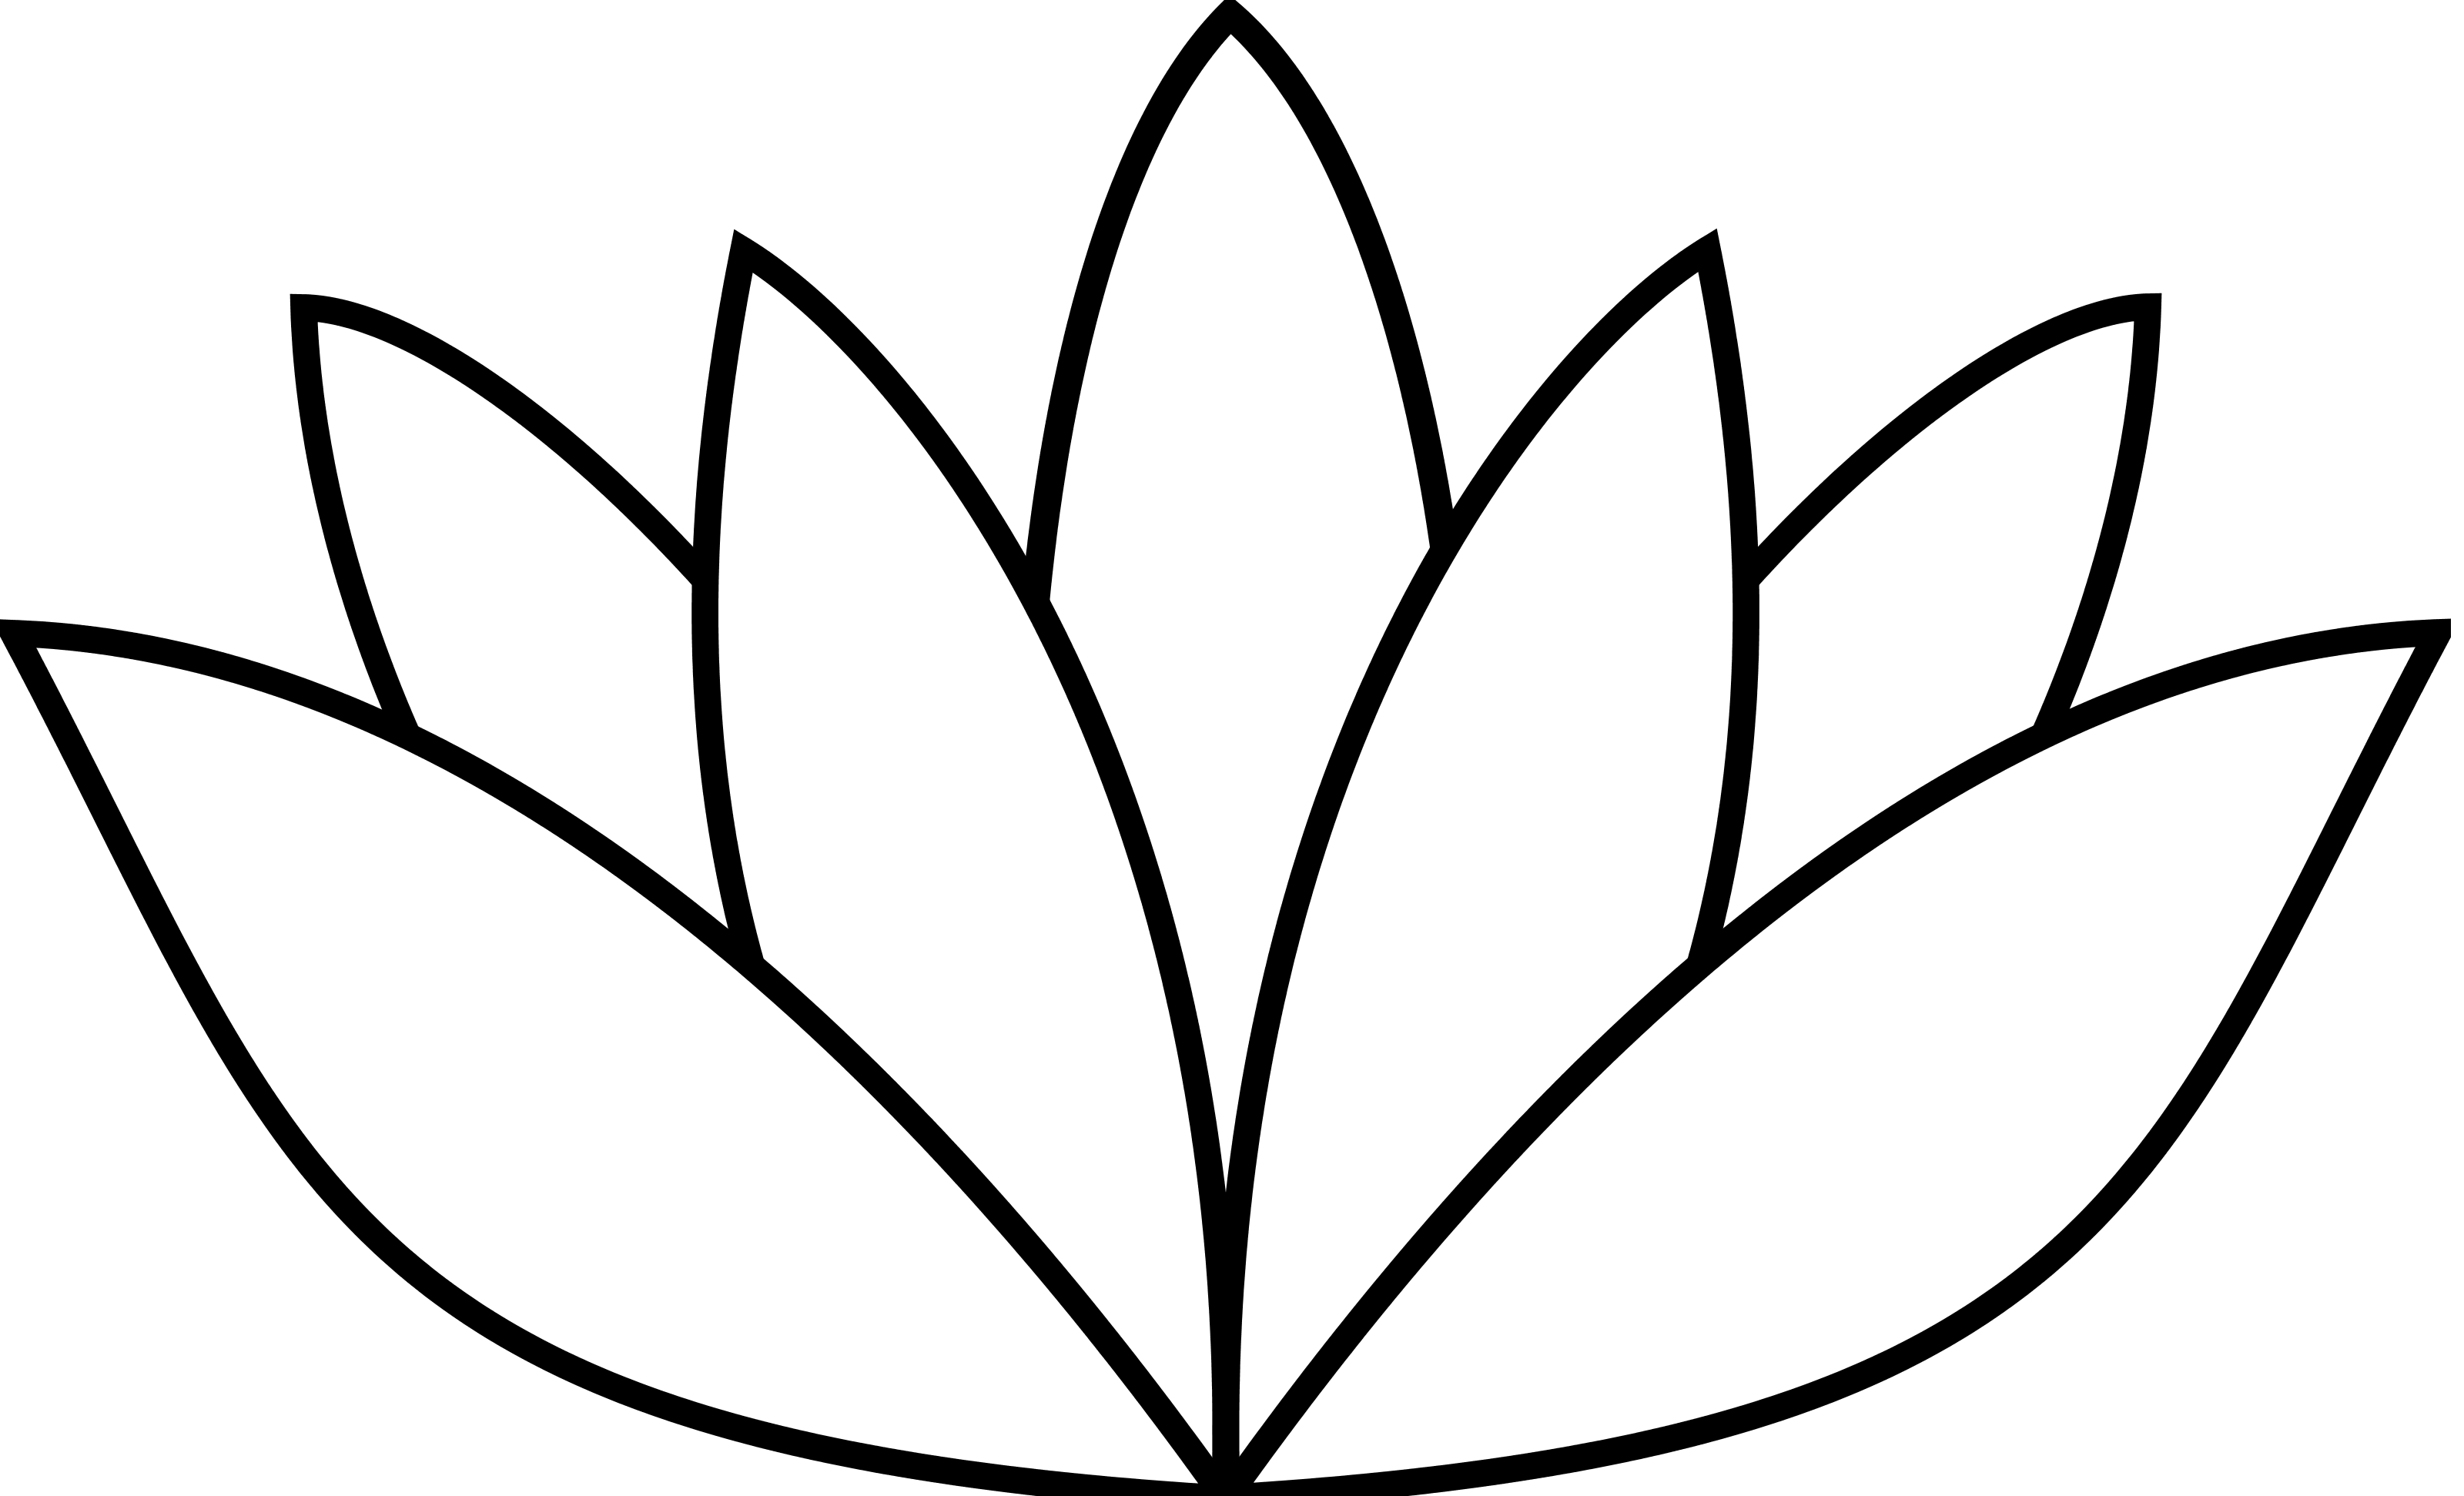 Lotus Flower Vector - ClipArt Best